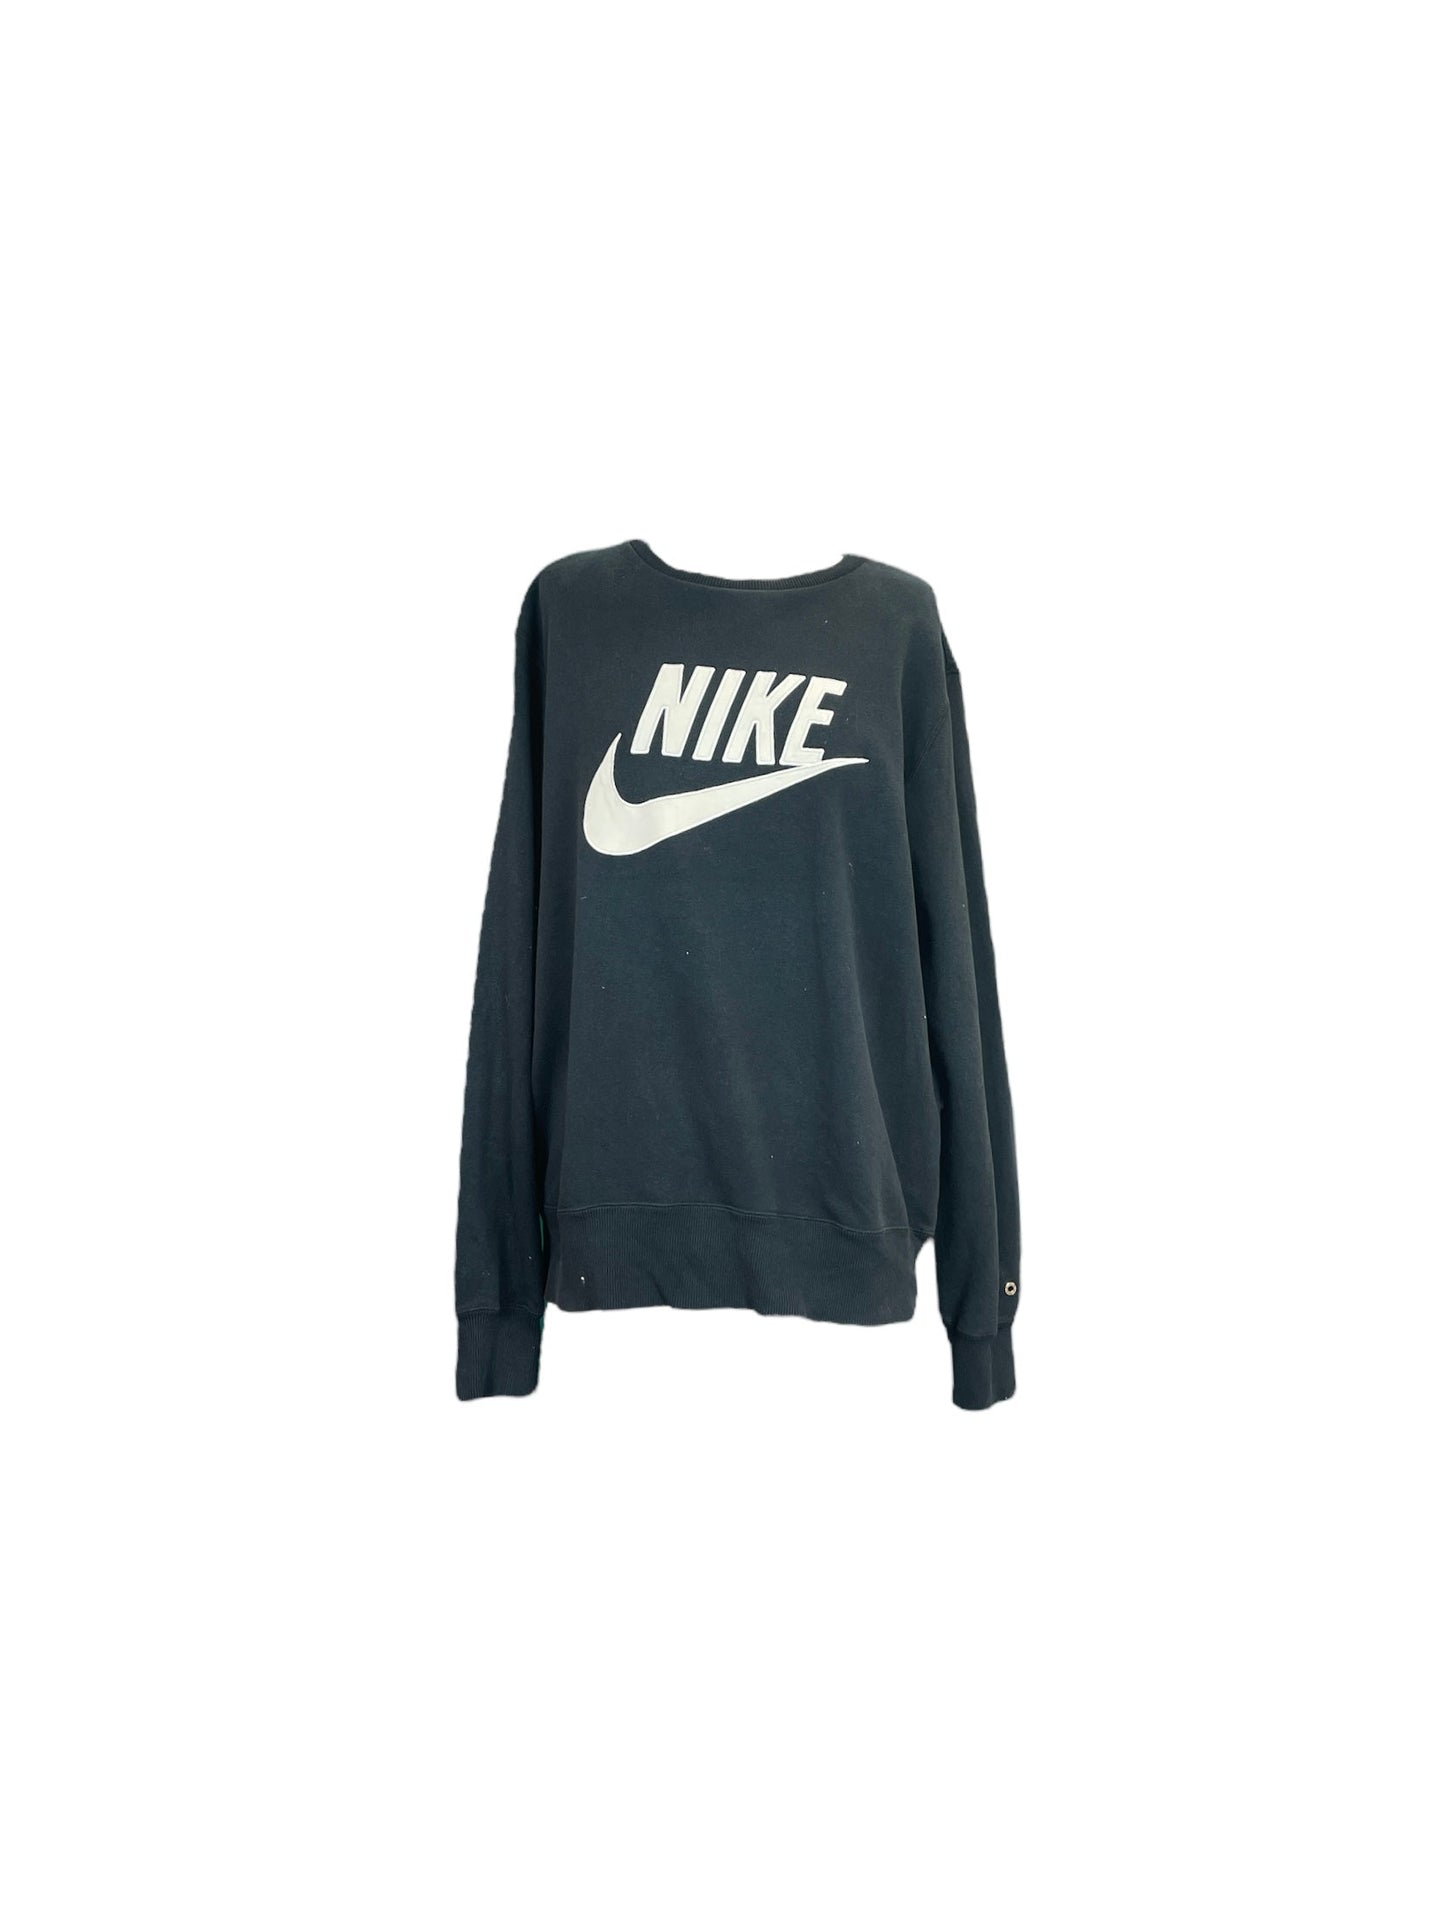 Womens Nike Crewneck Sweatshirt - L